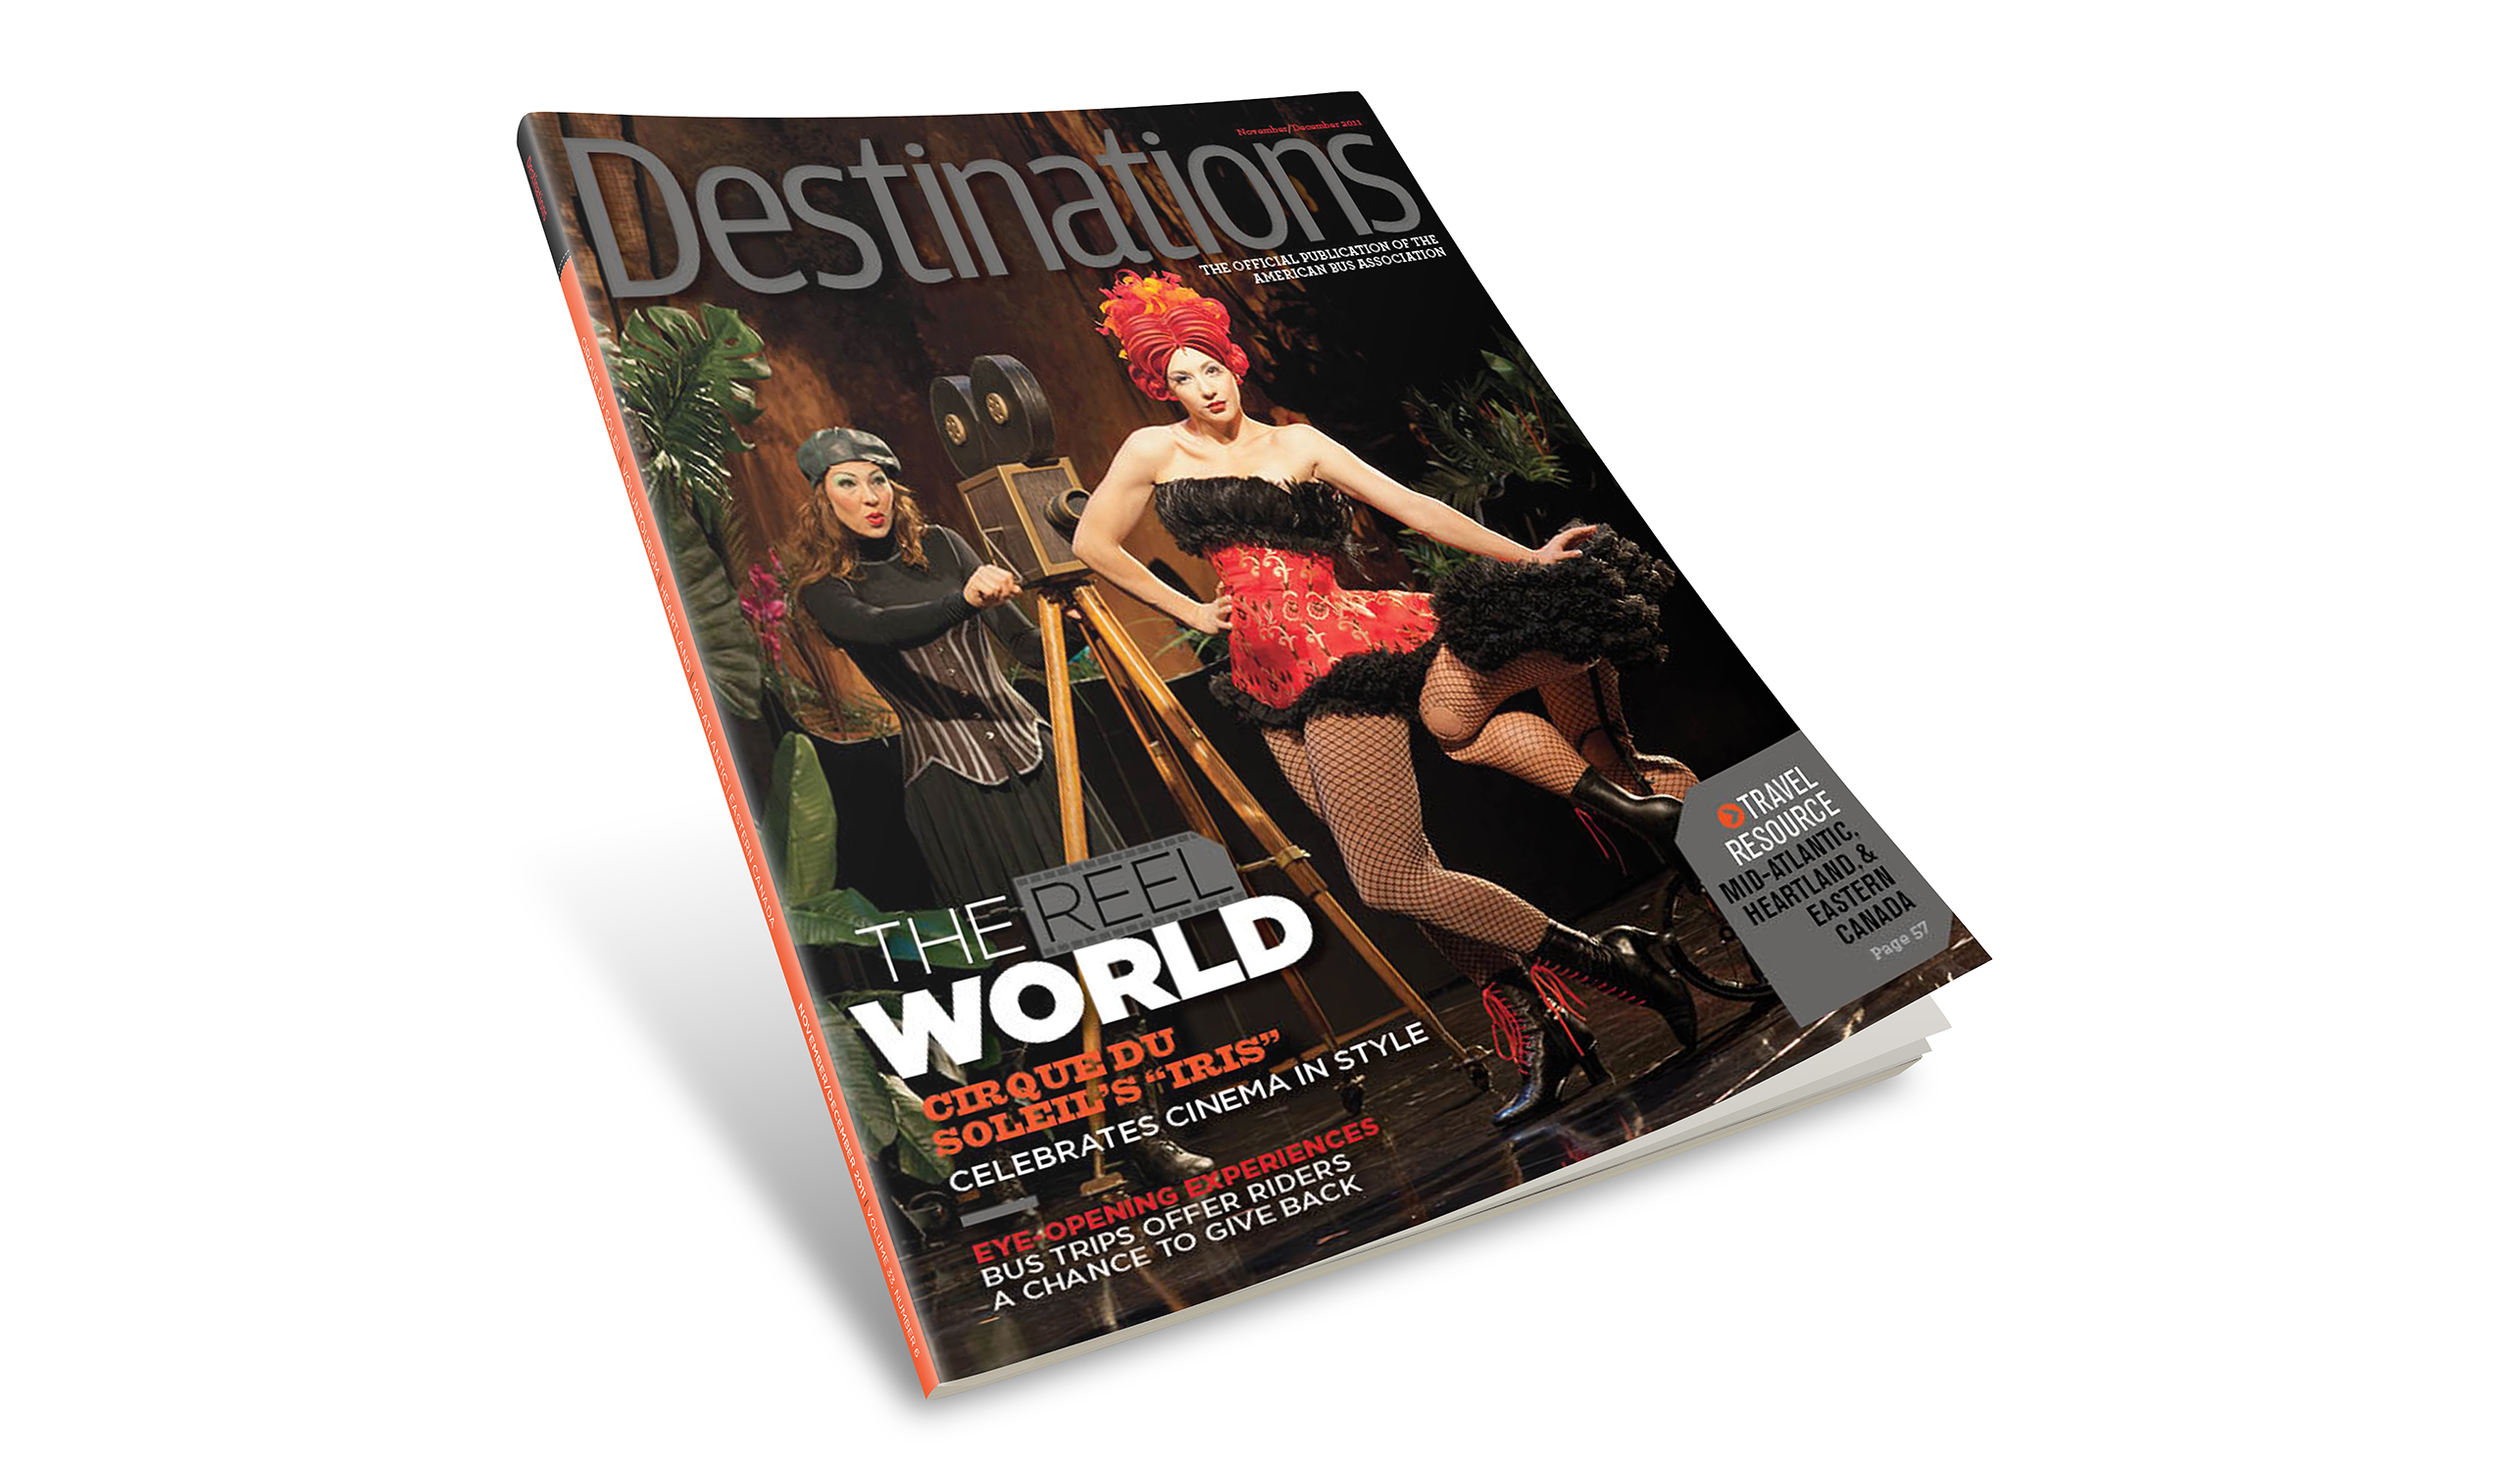 Destinations magazine